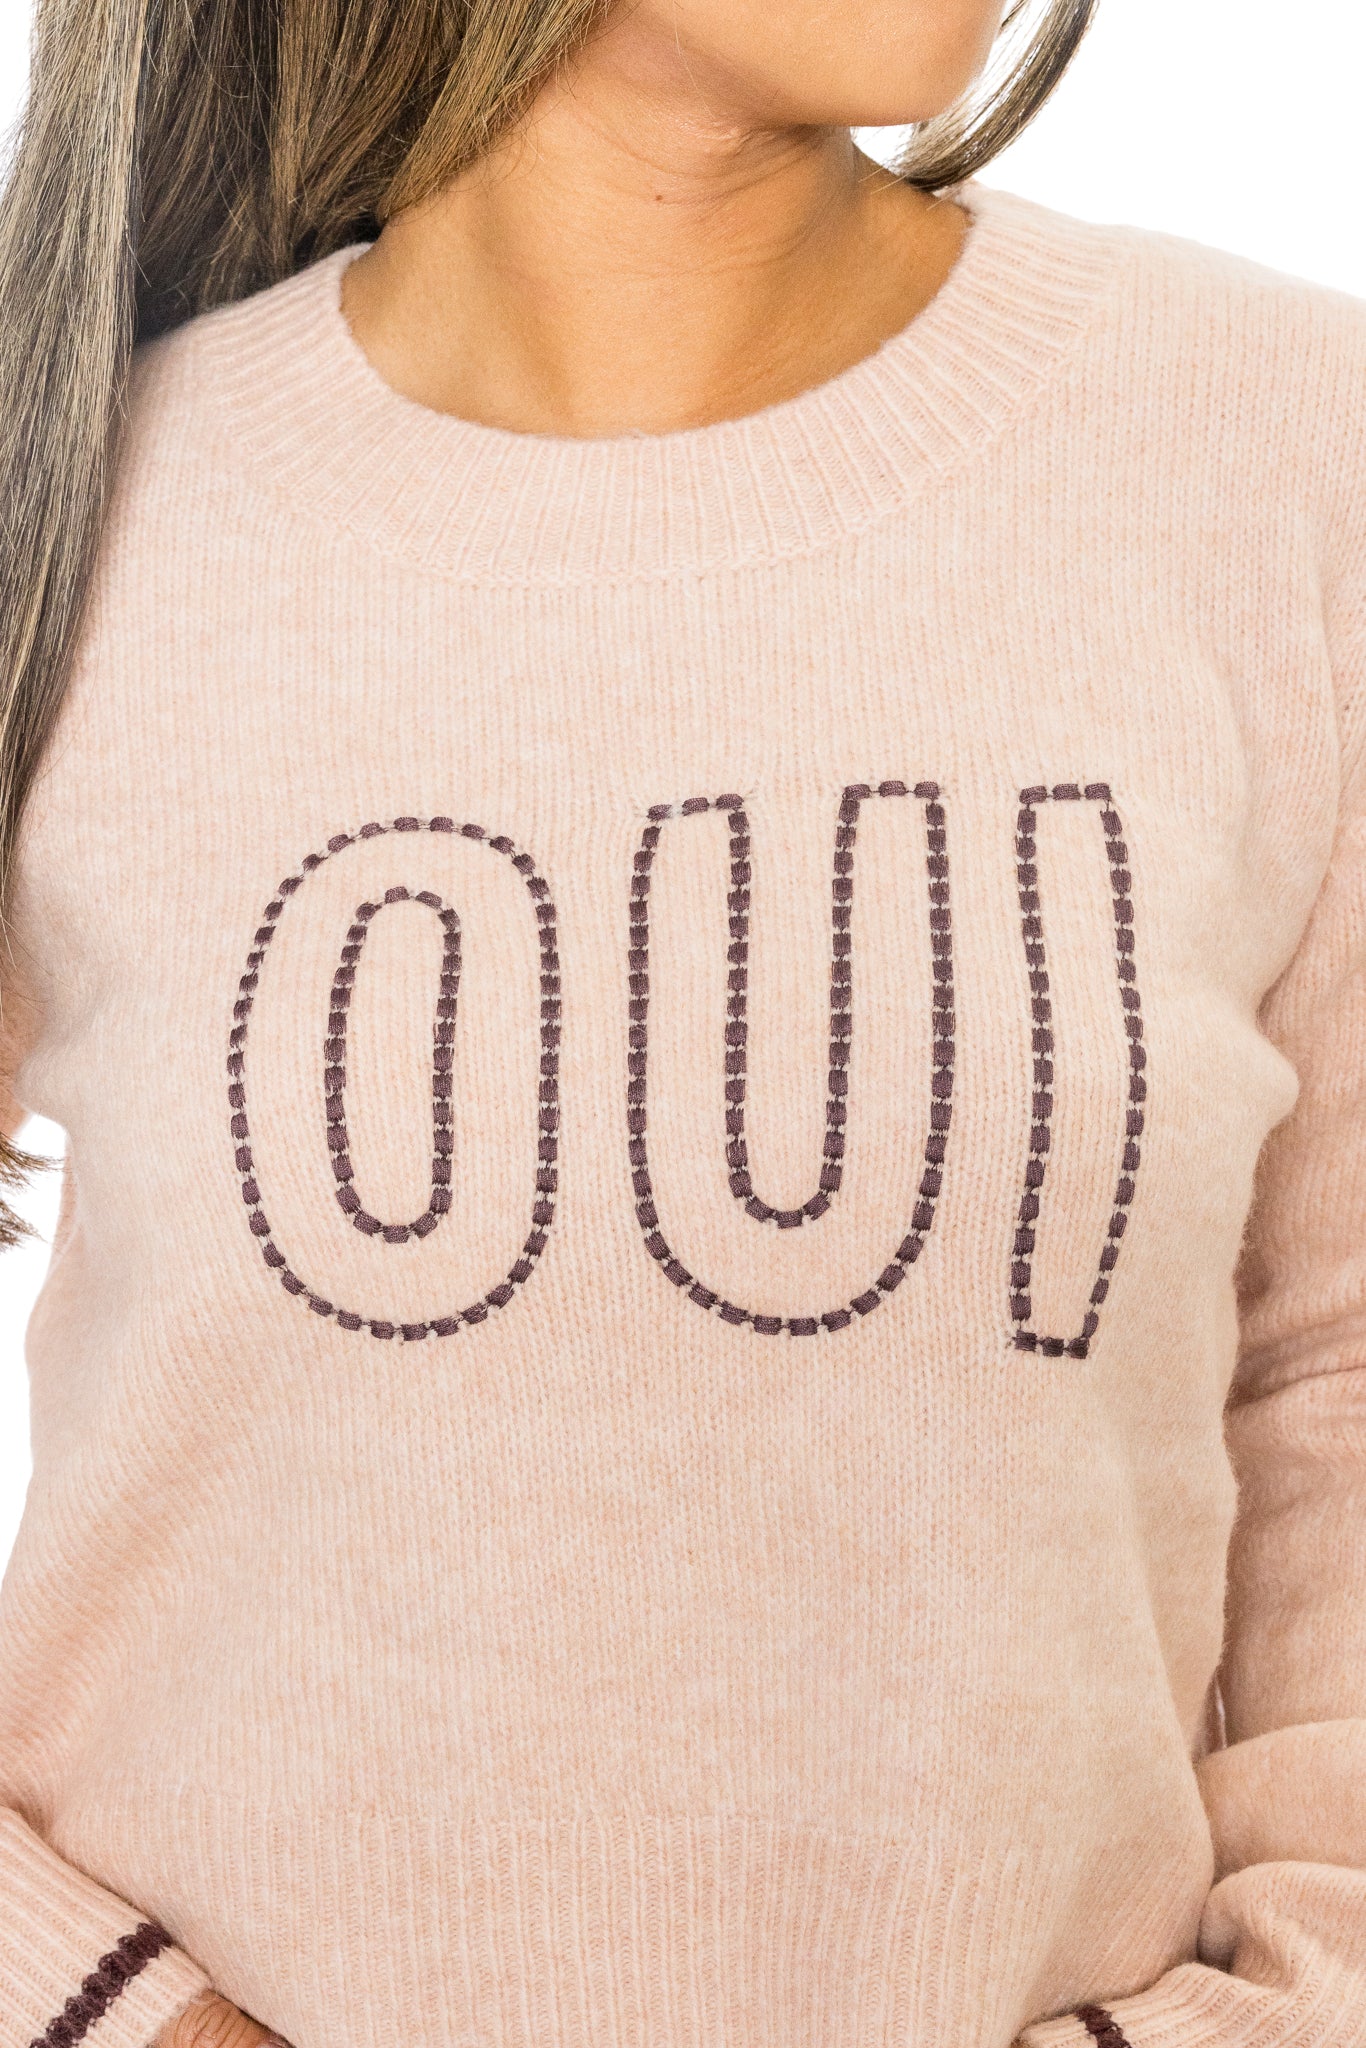 Oui Sweater by Z Supply